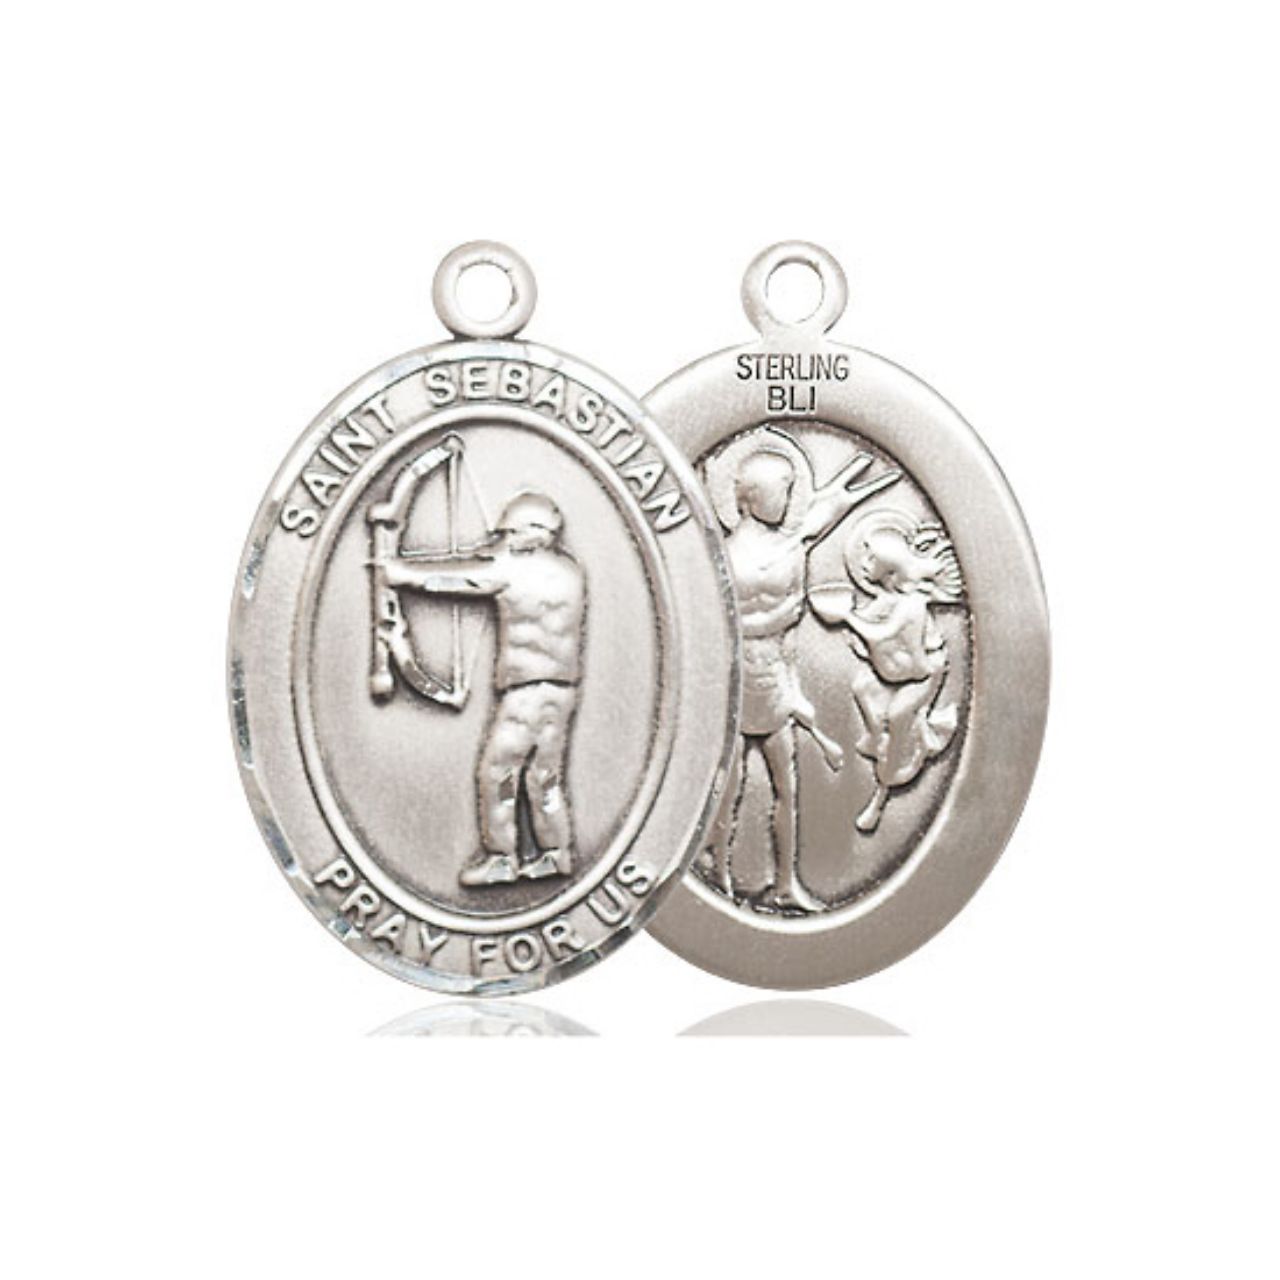 St. Sebastian Archery Medal - Sterling Silver Oval Pendant (3 Sizes)